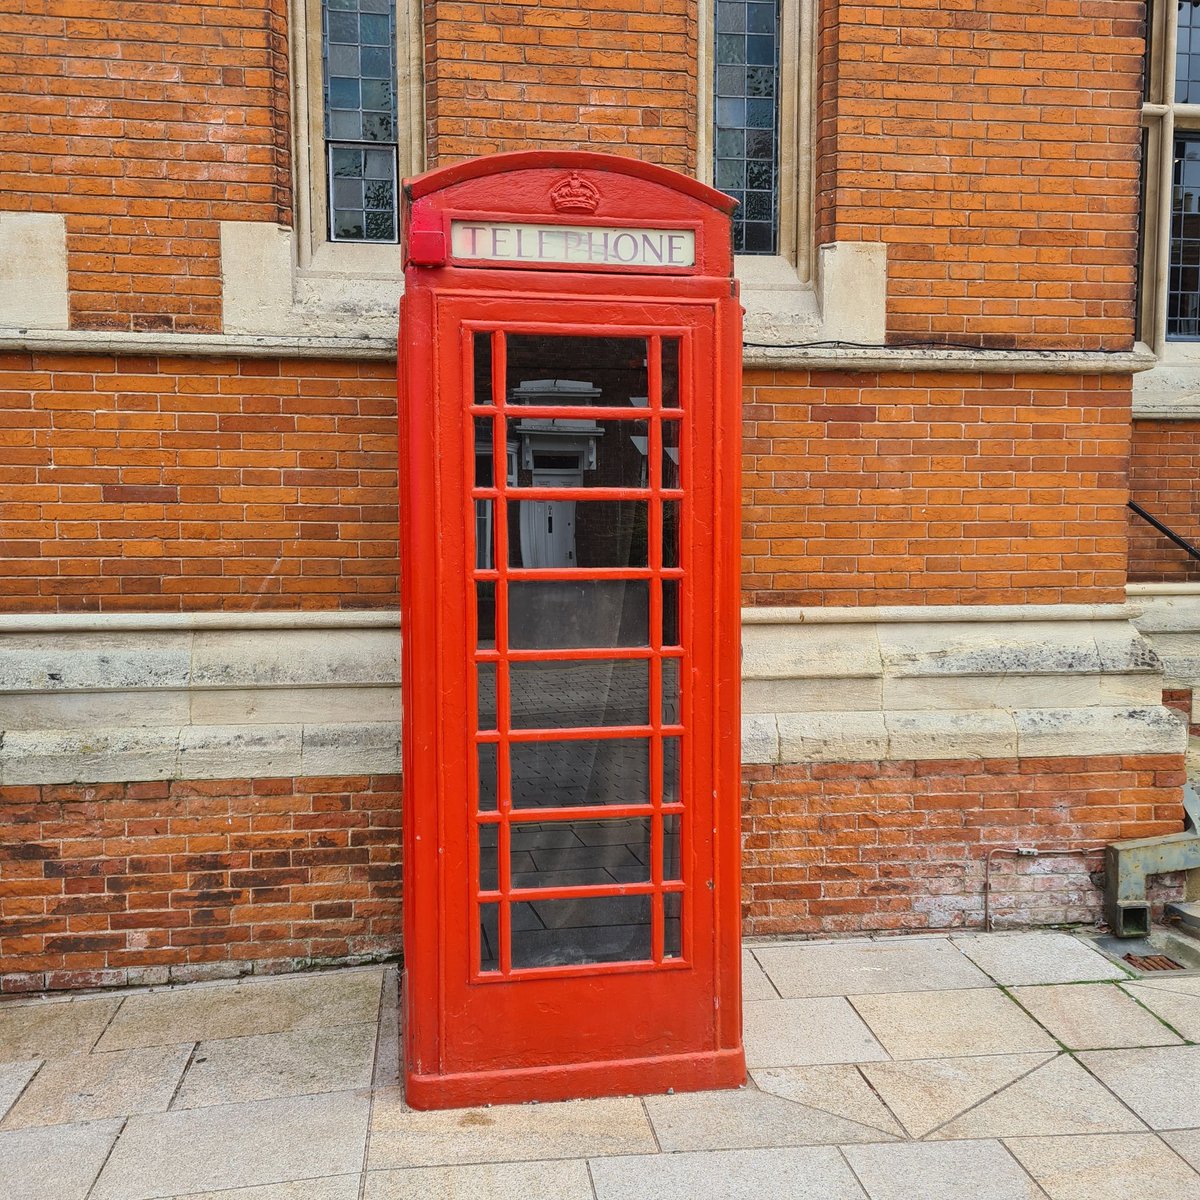 Weekend in Stratford Upon Avon. #redtelephonebox #redphonebox #k6telephonebox